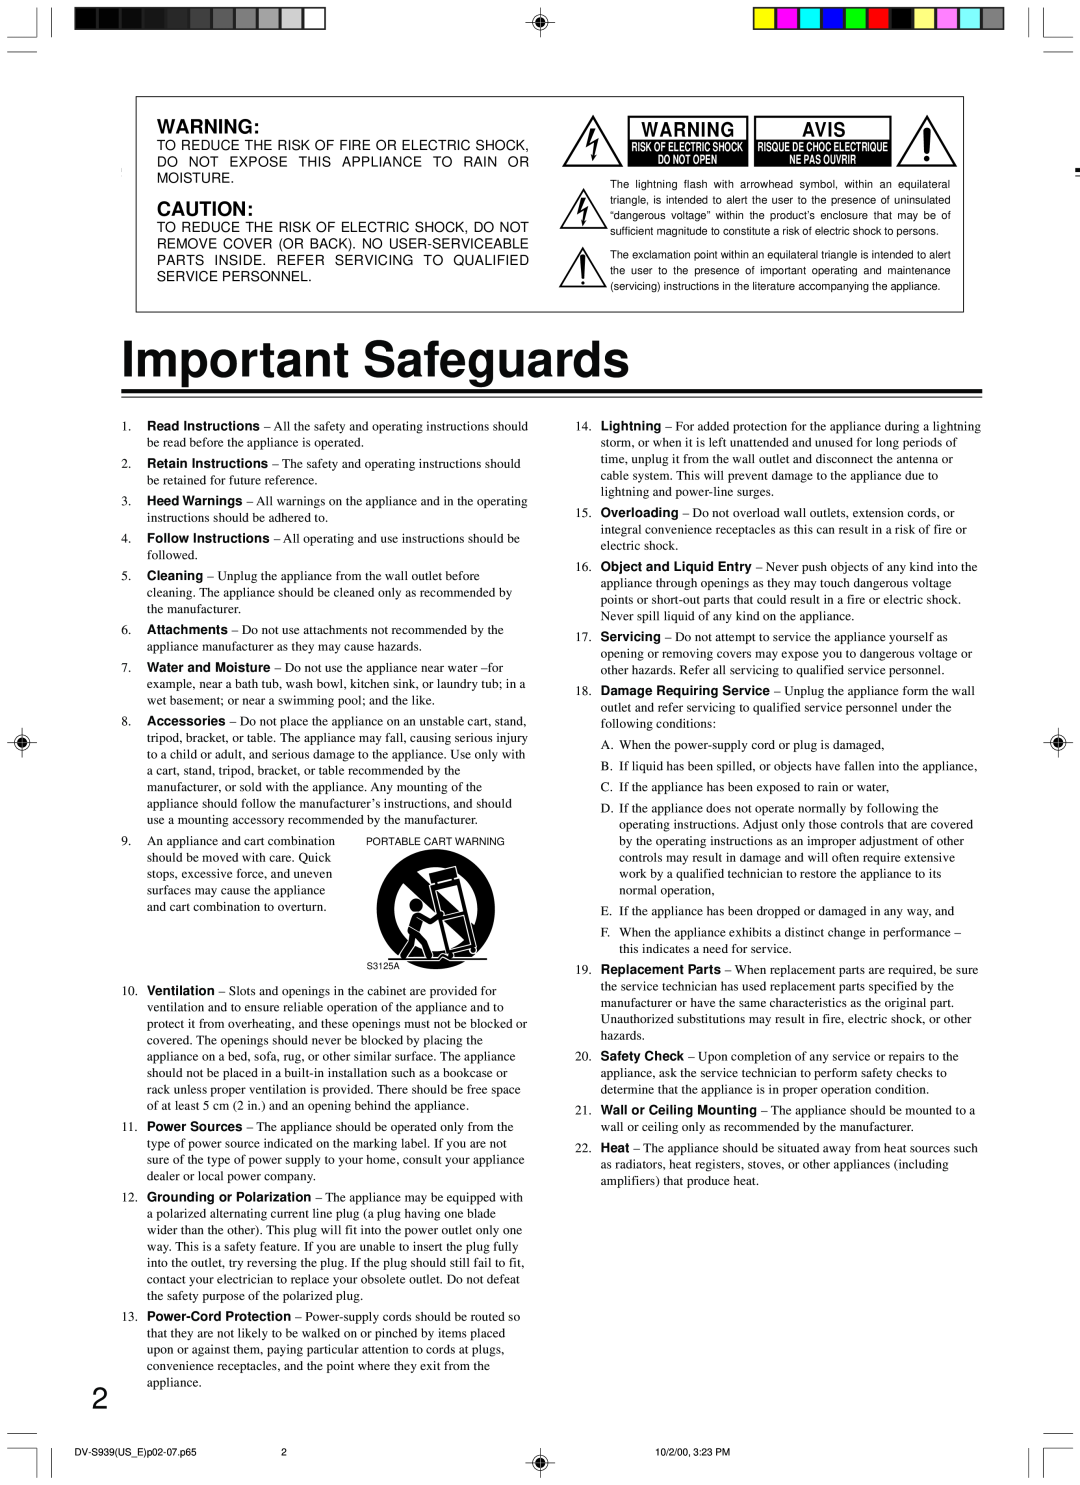 Onkyo DV-S939 instruction manual Important Safeguards, Avis 